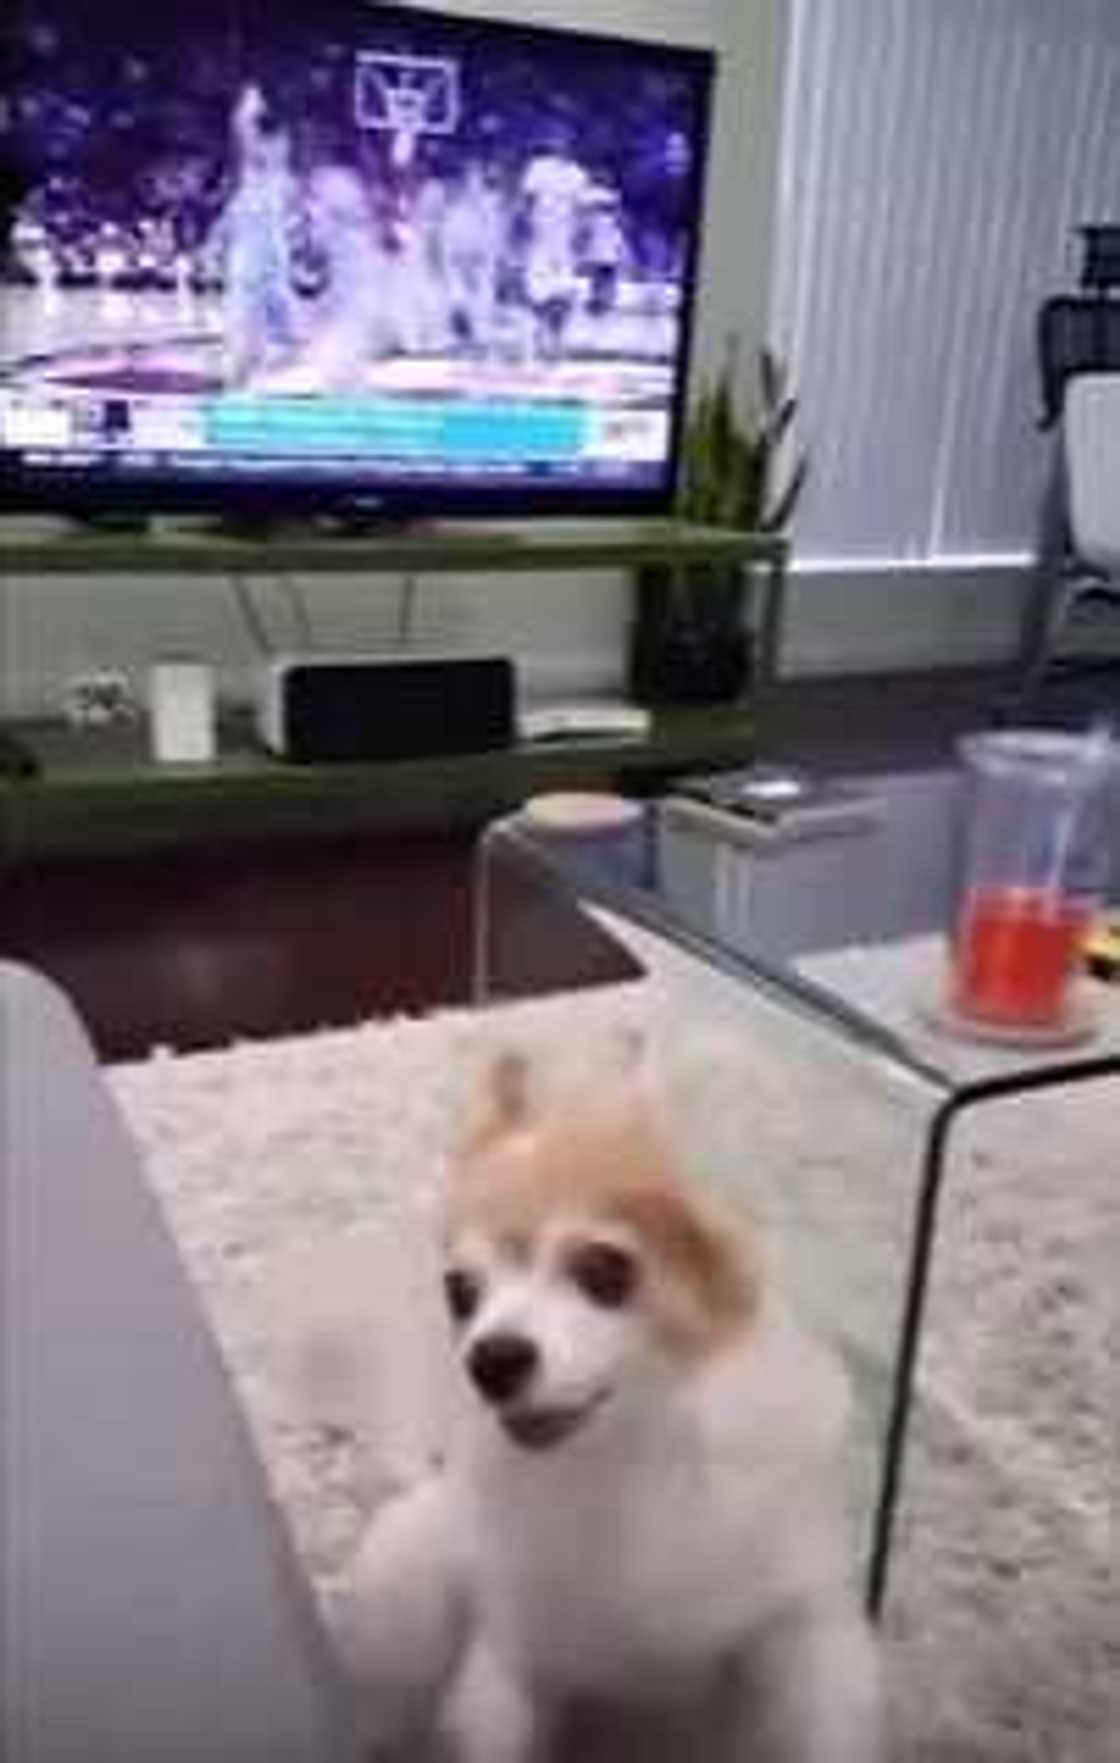 Dog's reaction after owner raised his middle finger went viral